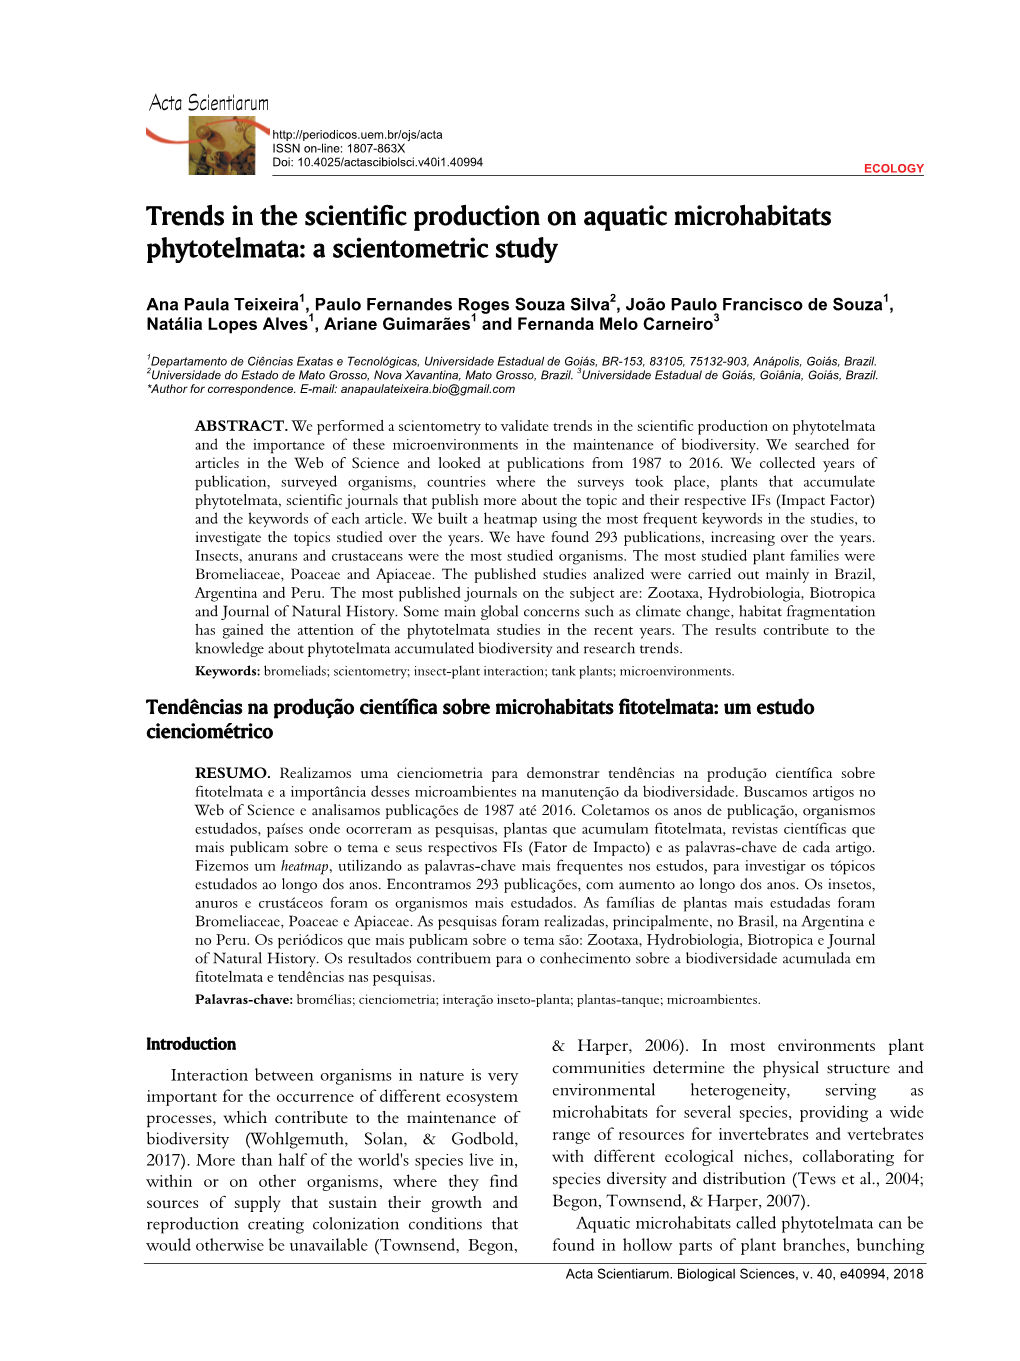 Trends in the Scientific Production on Aquatic Microhabitats Phytotelmata: a Scientometric Study